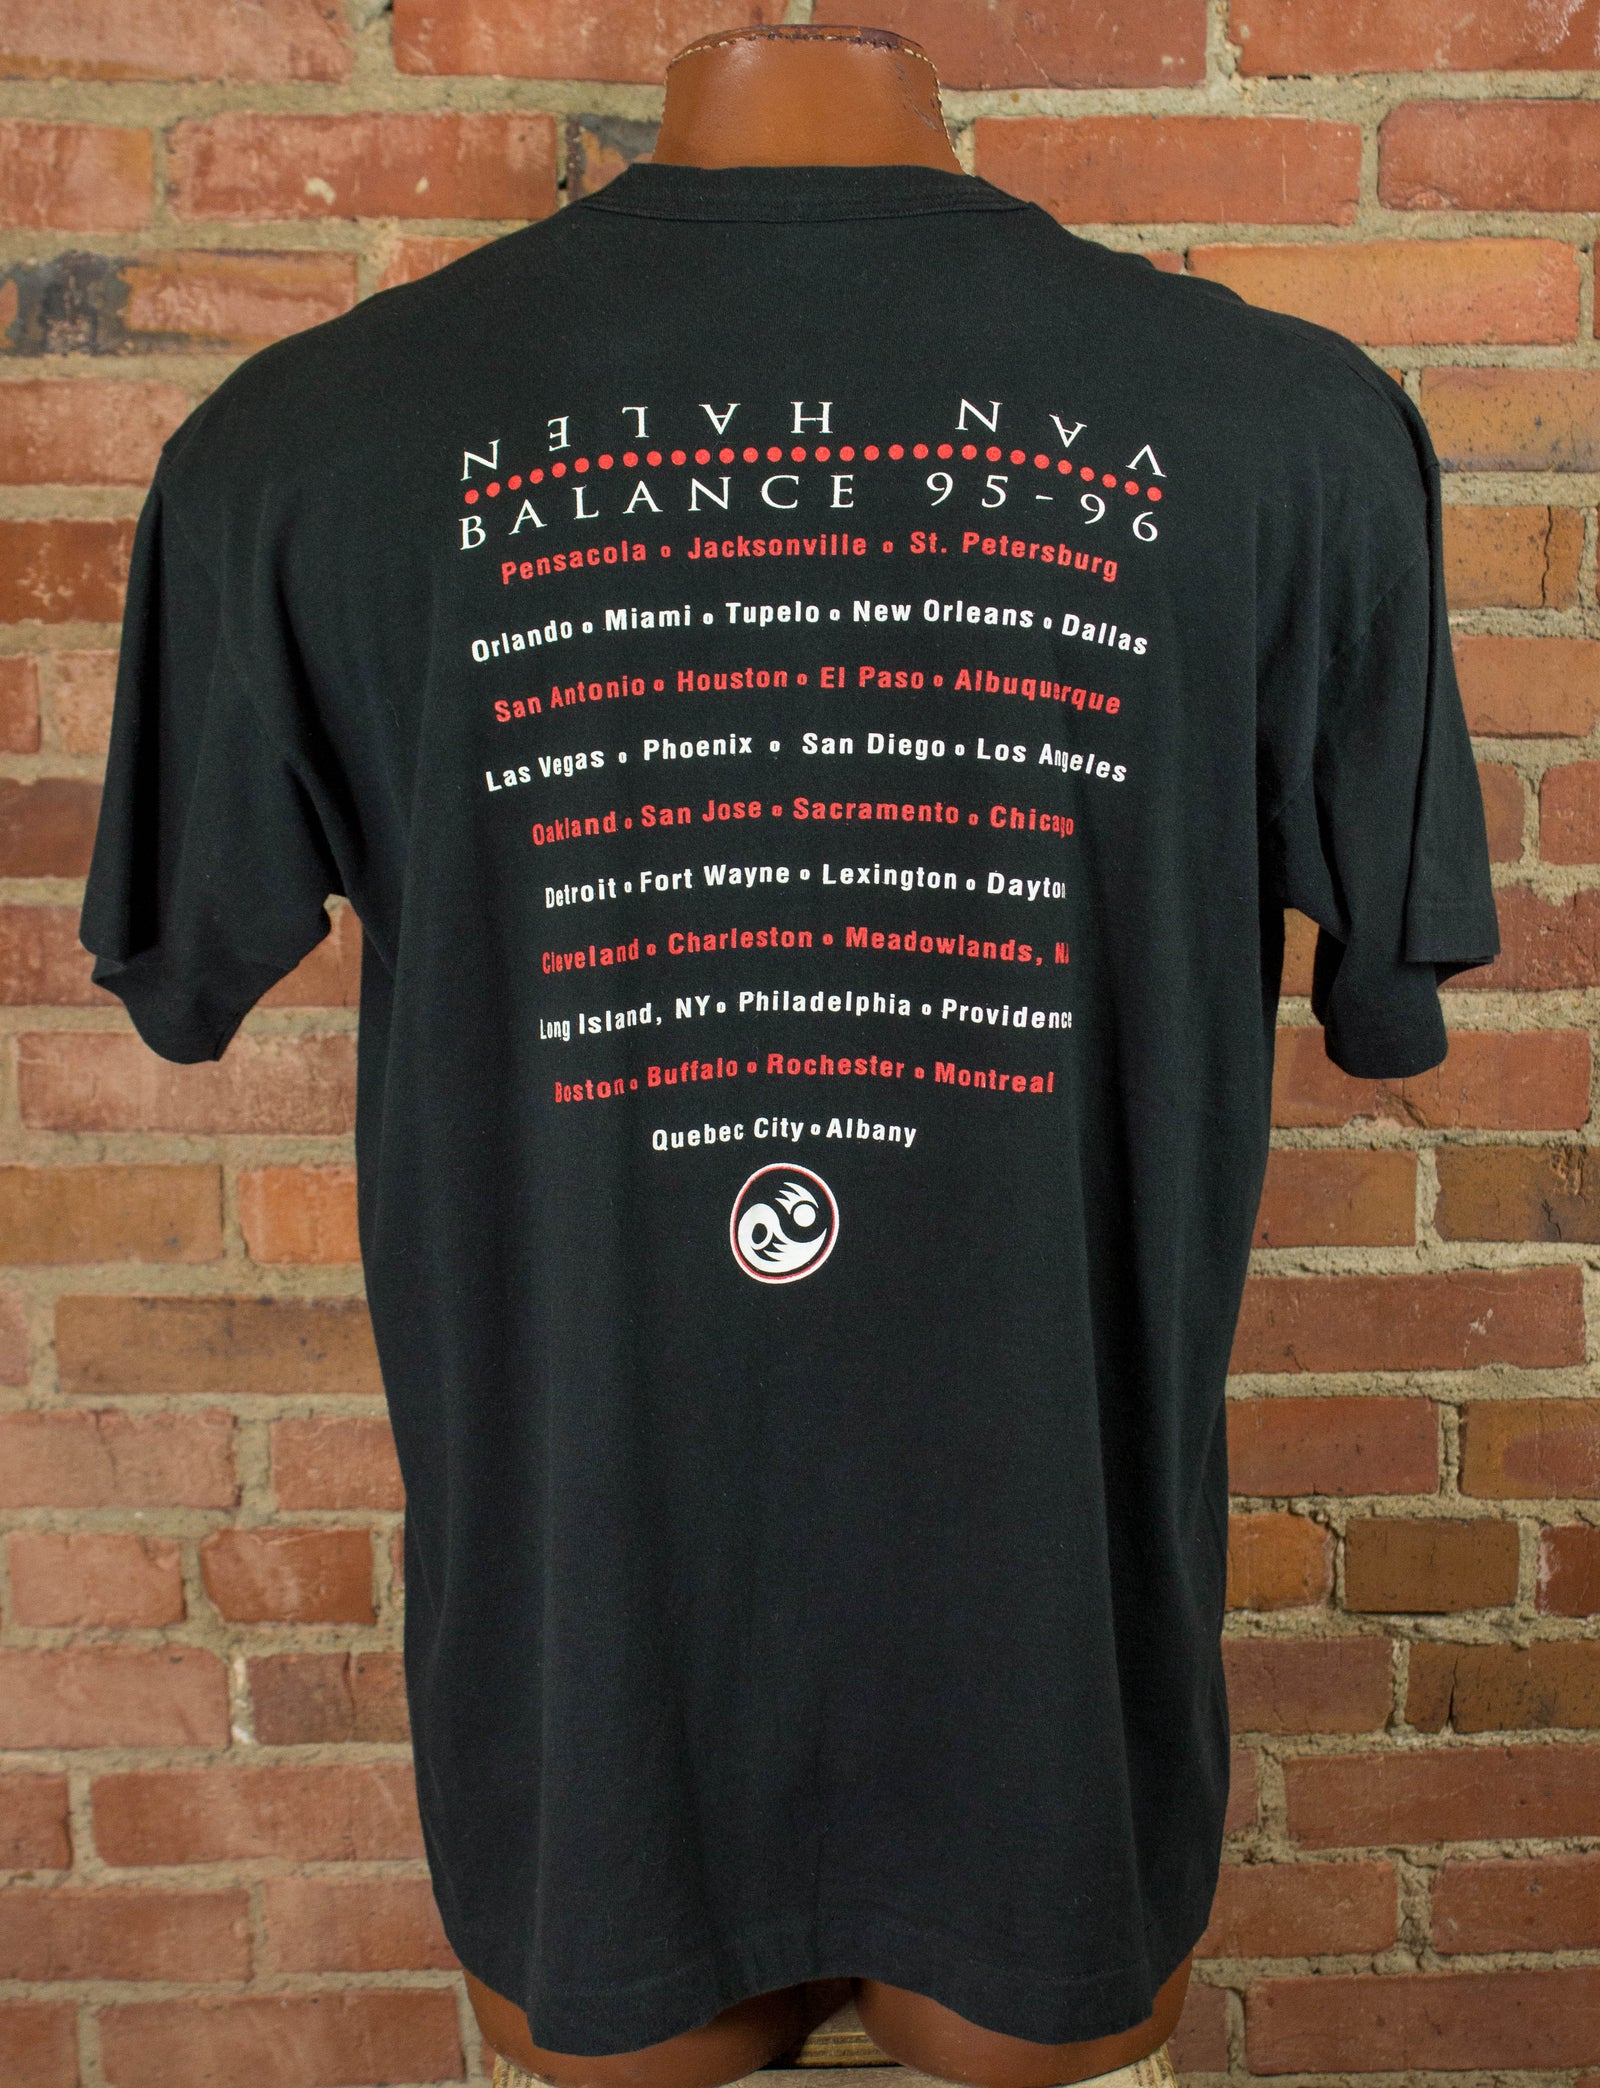 LV Concert Print T-Shirt - Luxury Black